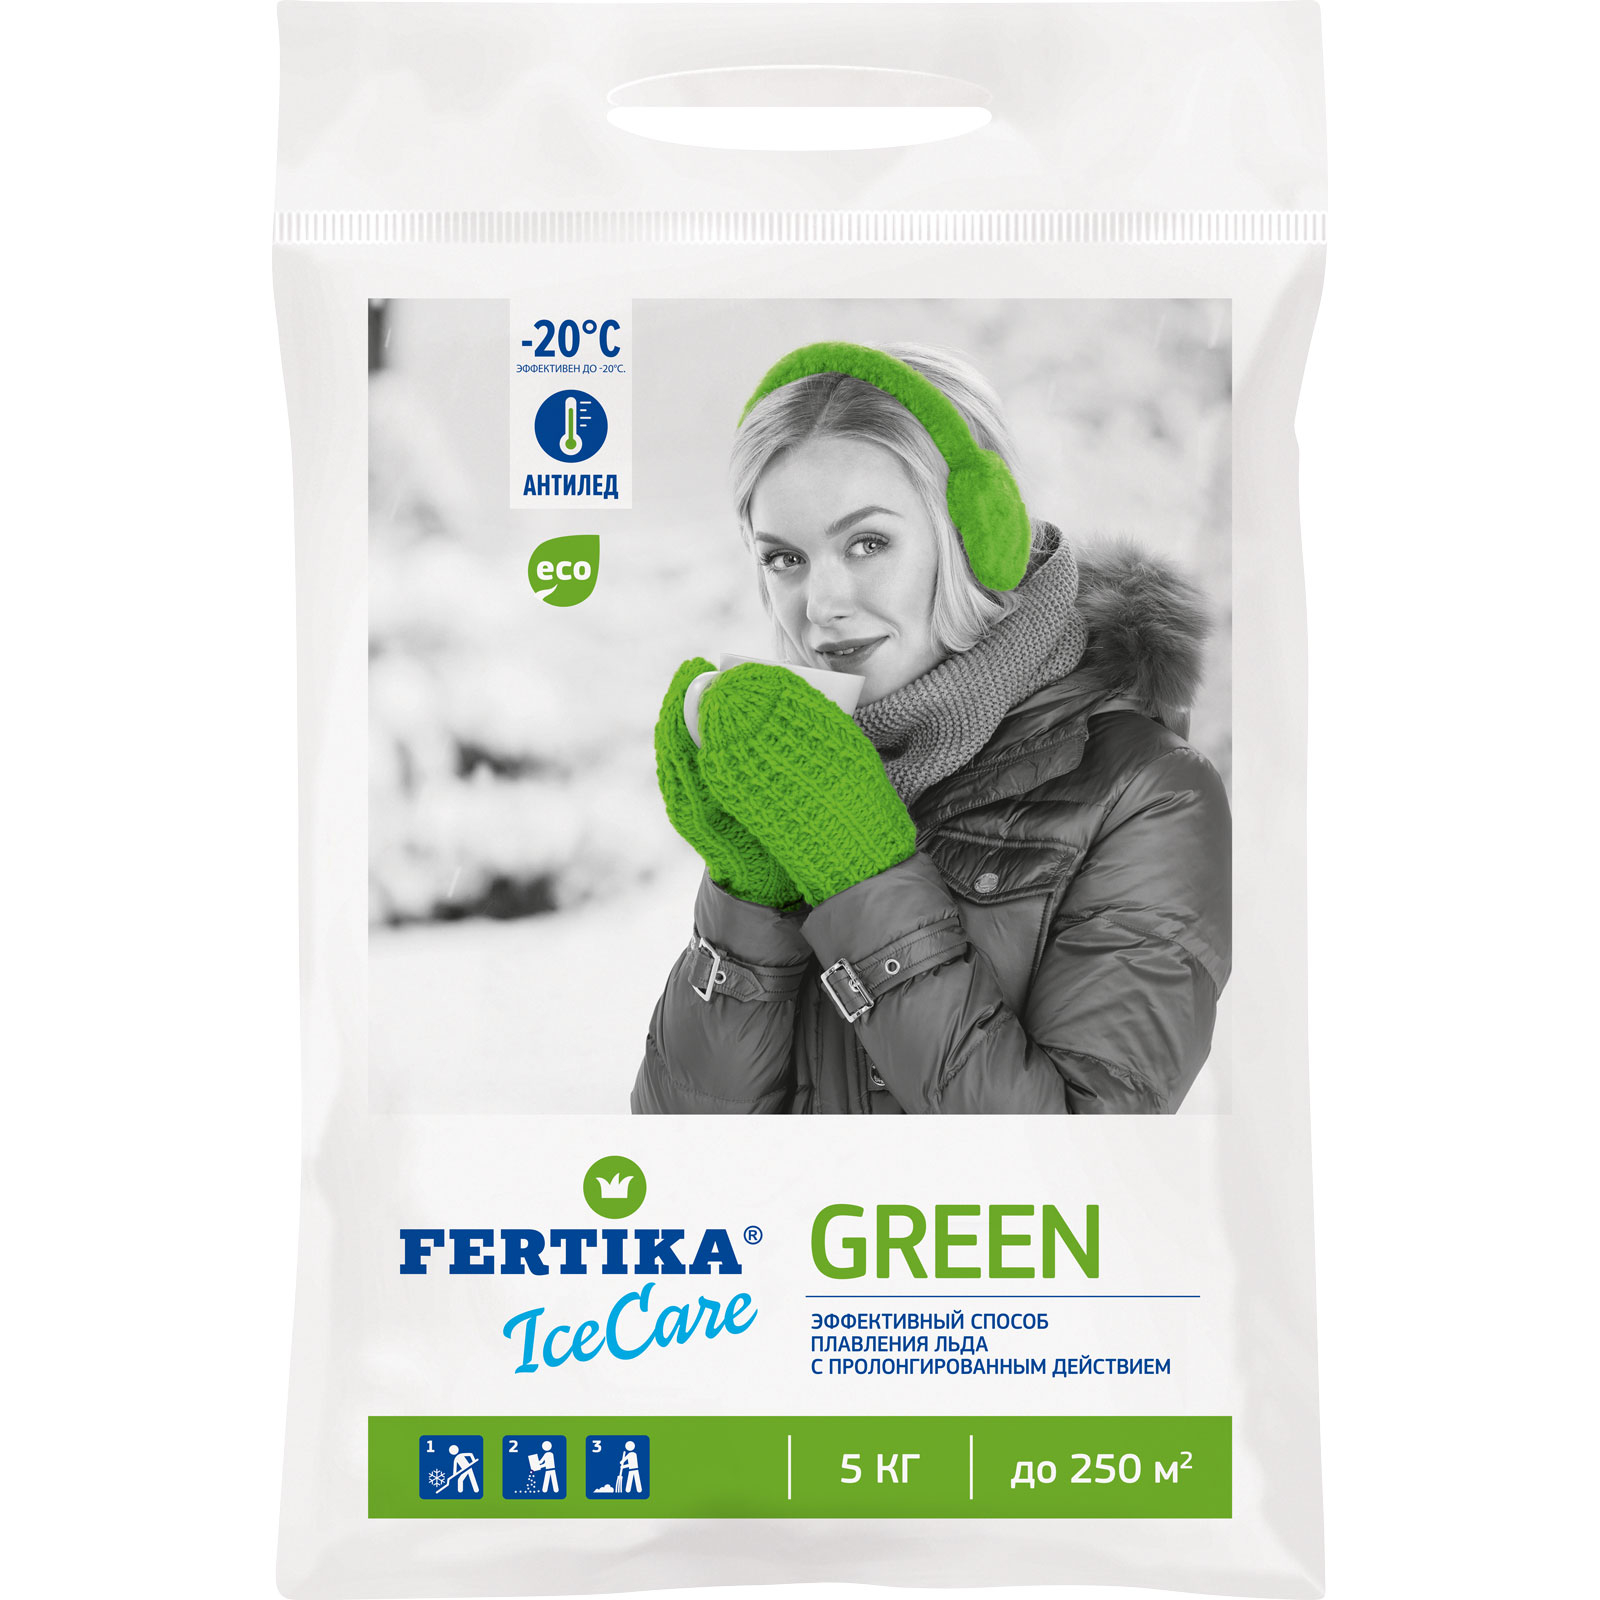 фото Реагент фертика icecare green для температуры -20°с, 5 кг